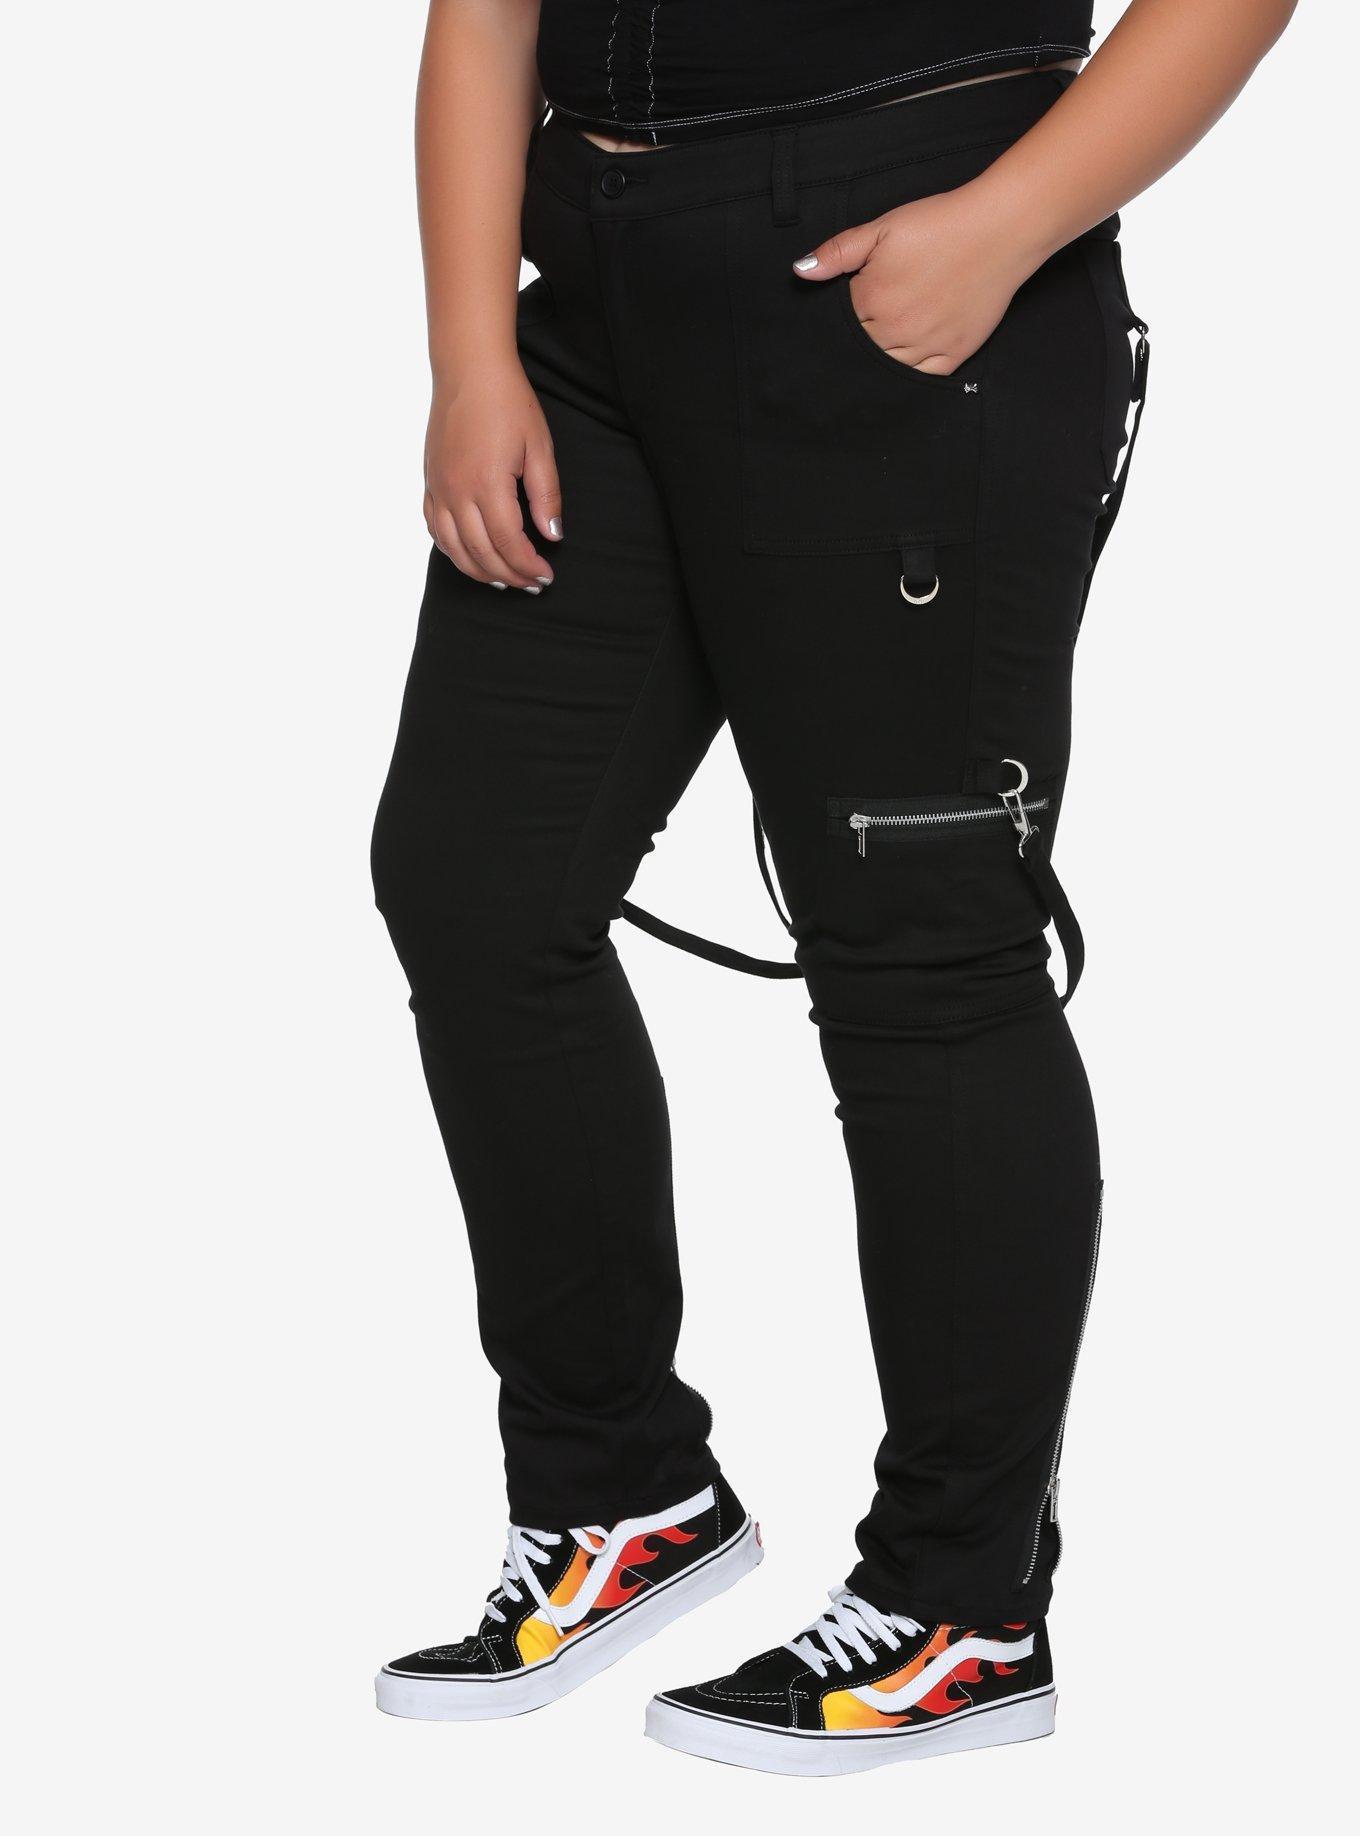 Royal Bones By Tripp Black Strap Skinny Jeans Plus Size, BLACK, hi-res